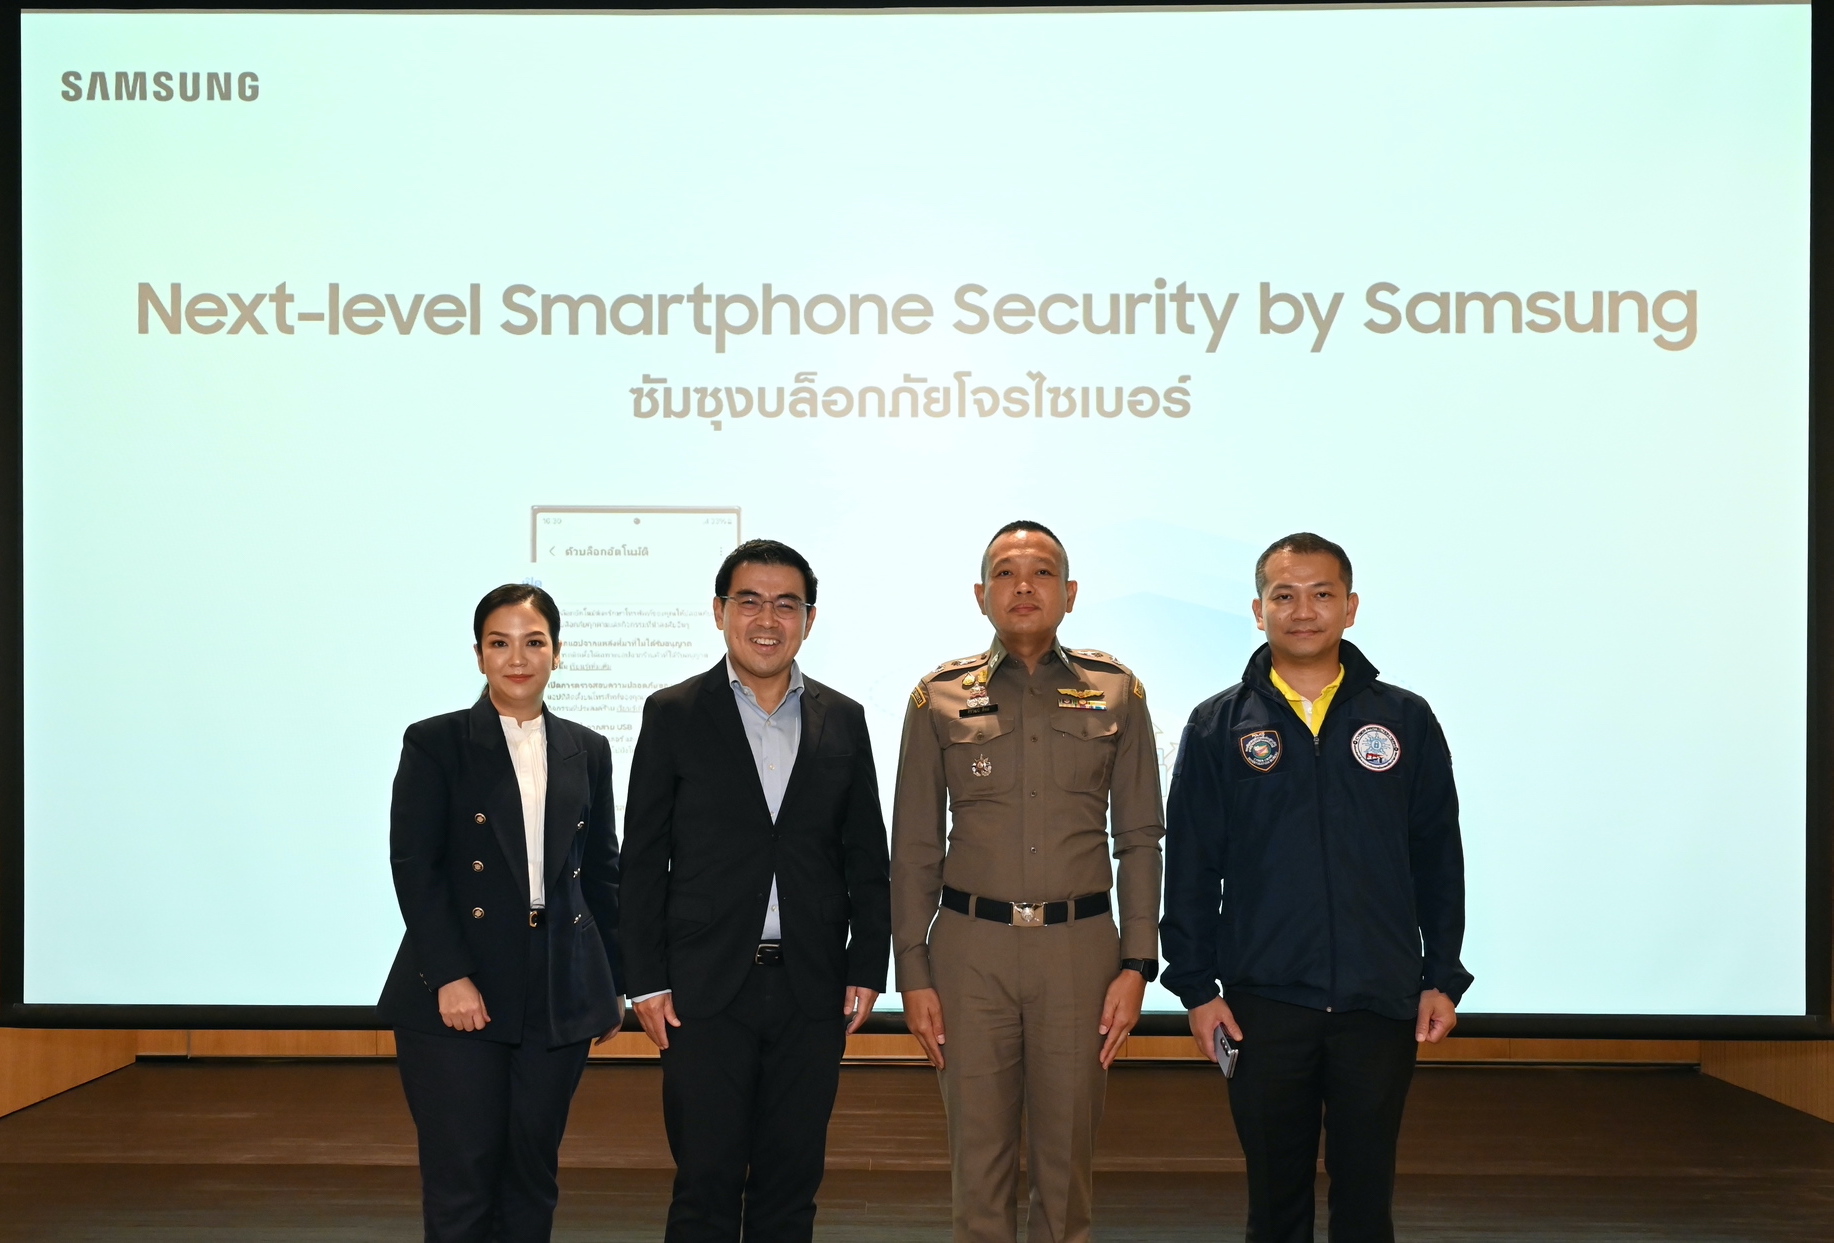 Next level smartphone security by Samsung 4 | Auto Blocker | Auto Blocker นวัตกรรมเพื่อความปลอดภัยสูงสุดให้ผู้ใช้ซัมซุง กาแล็คซี่